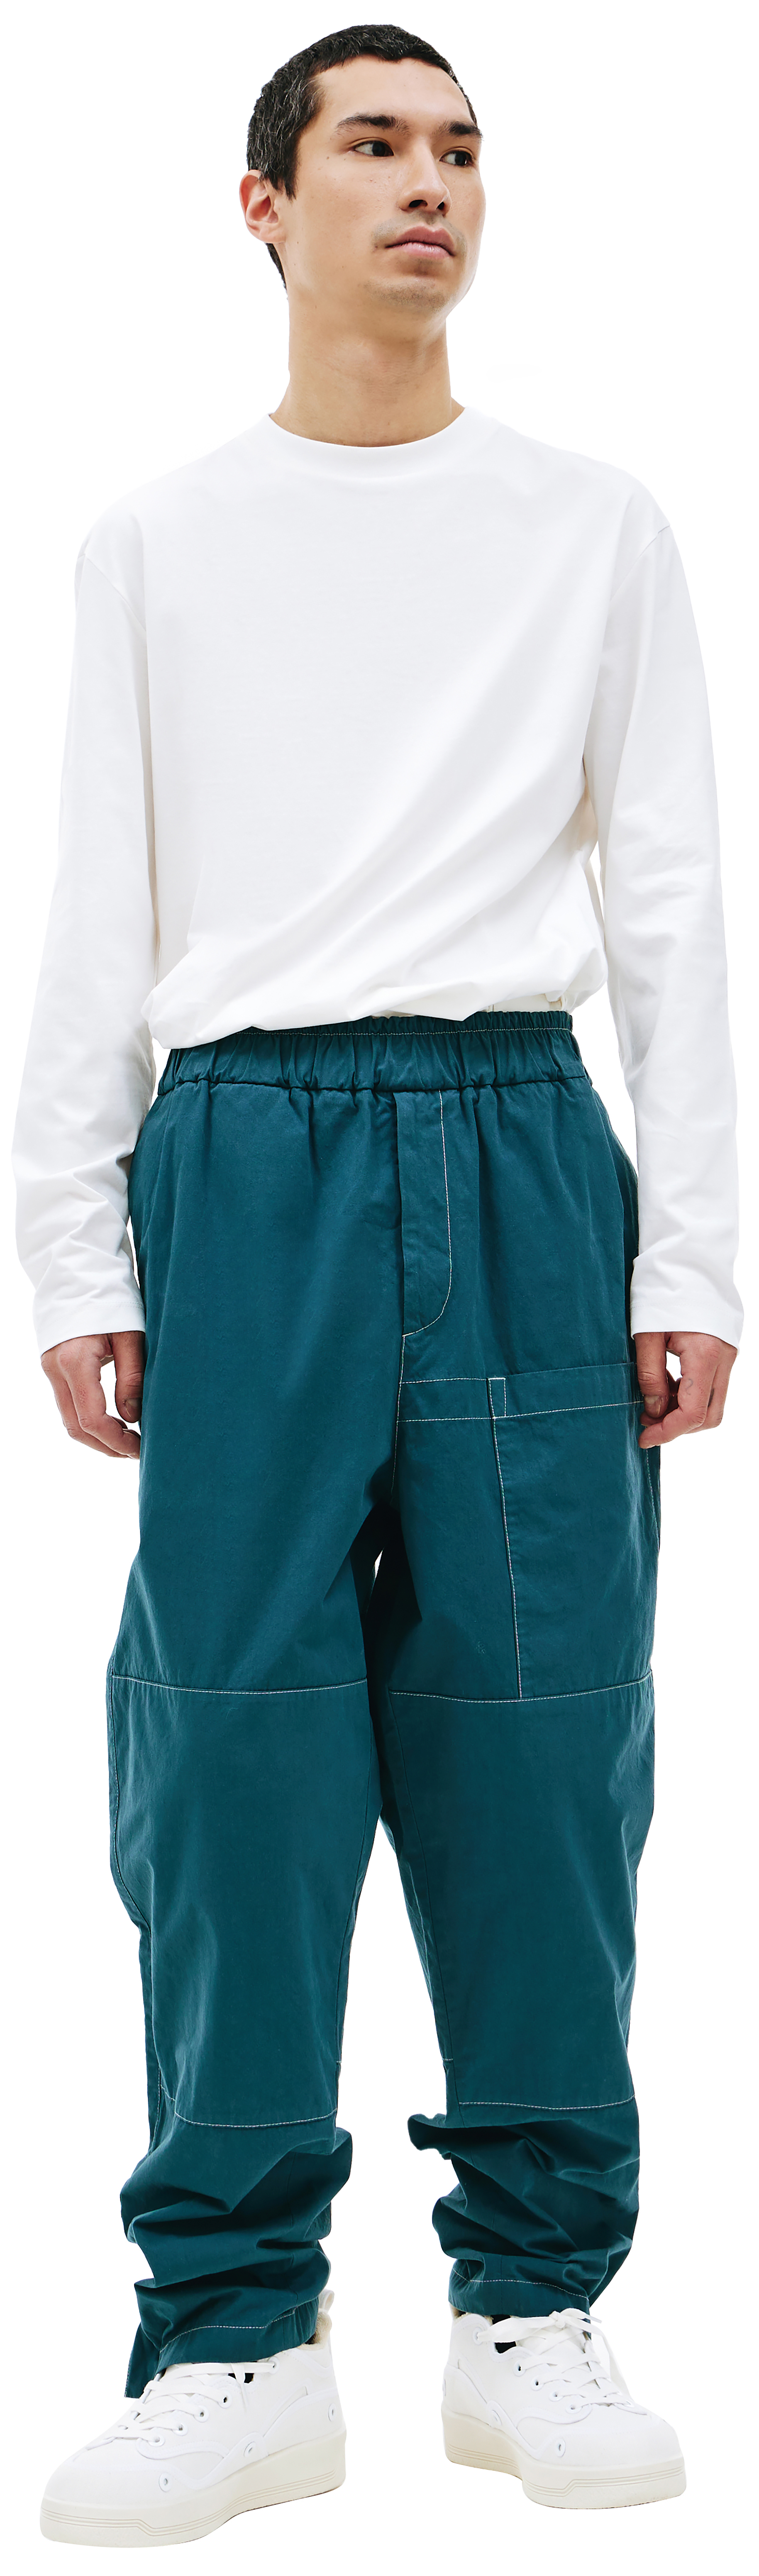 Buy Jil Sander men navy blue pants with contrast seams for $669